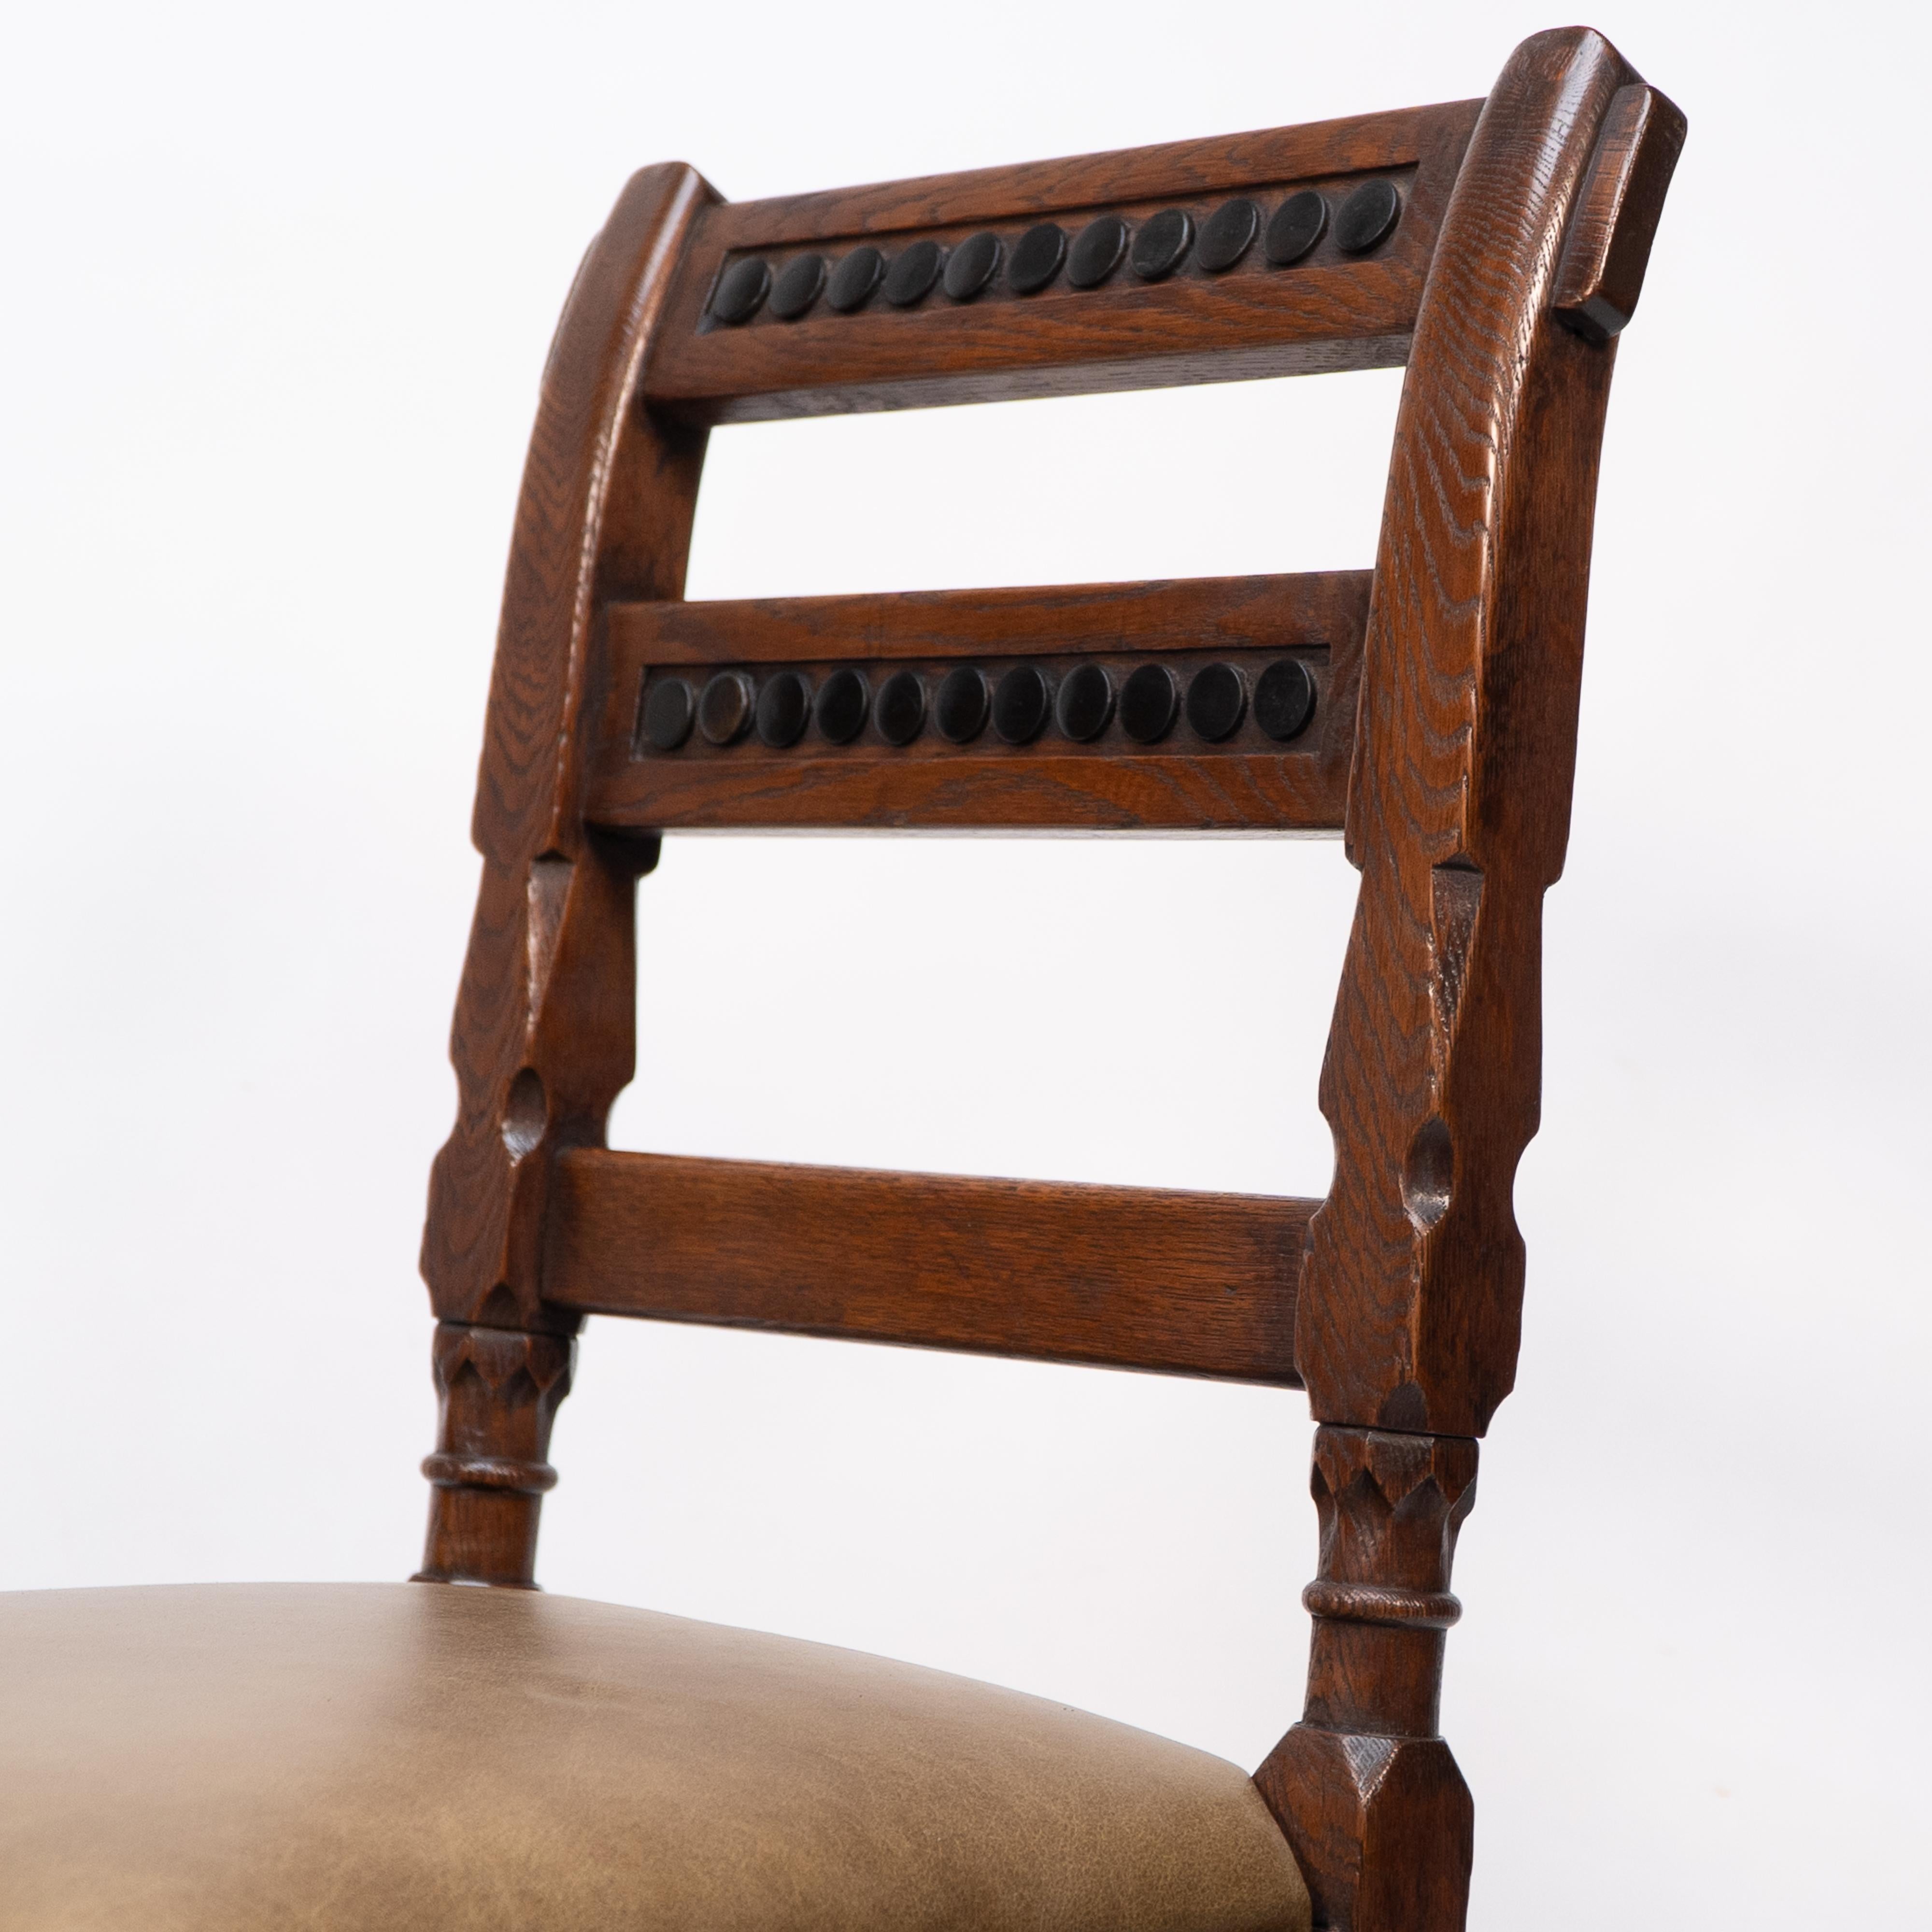 J P Seddon attri. An Aesthetic Movement oak side chair with ebonized circles For Sale 1